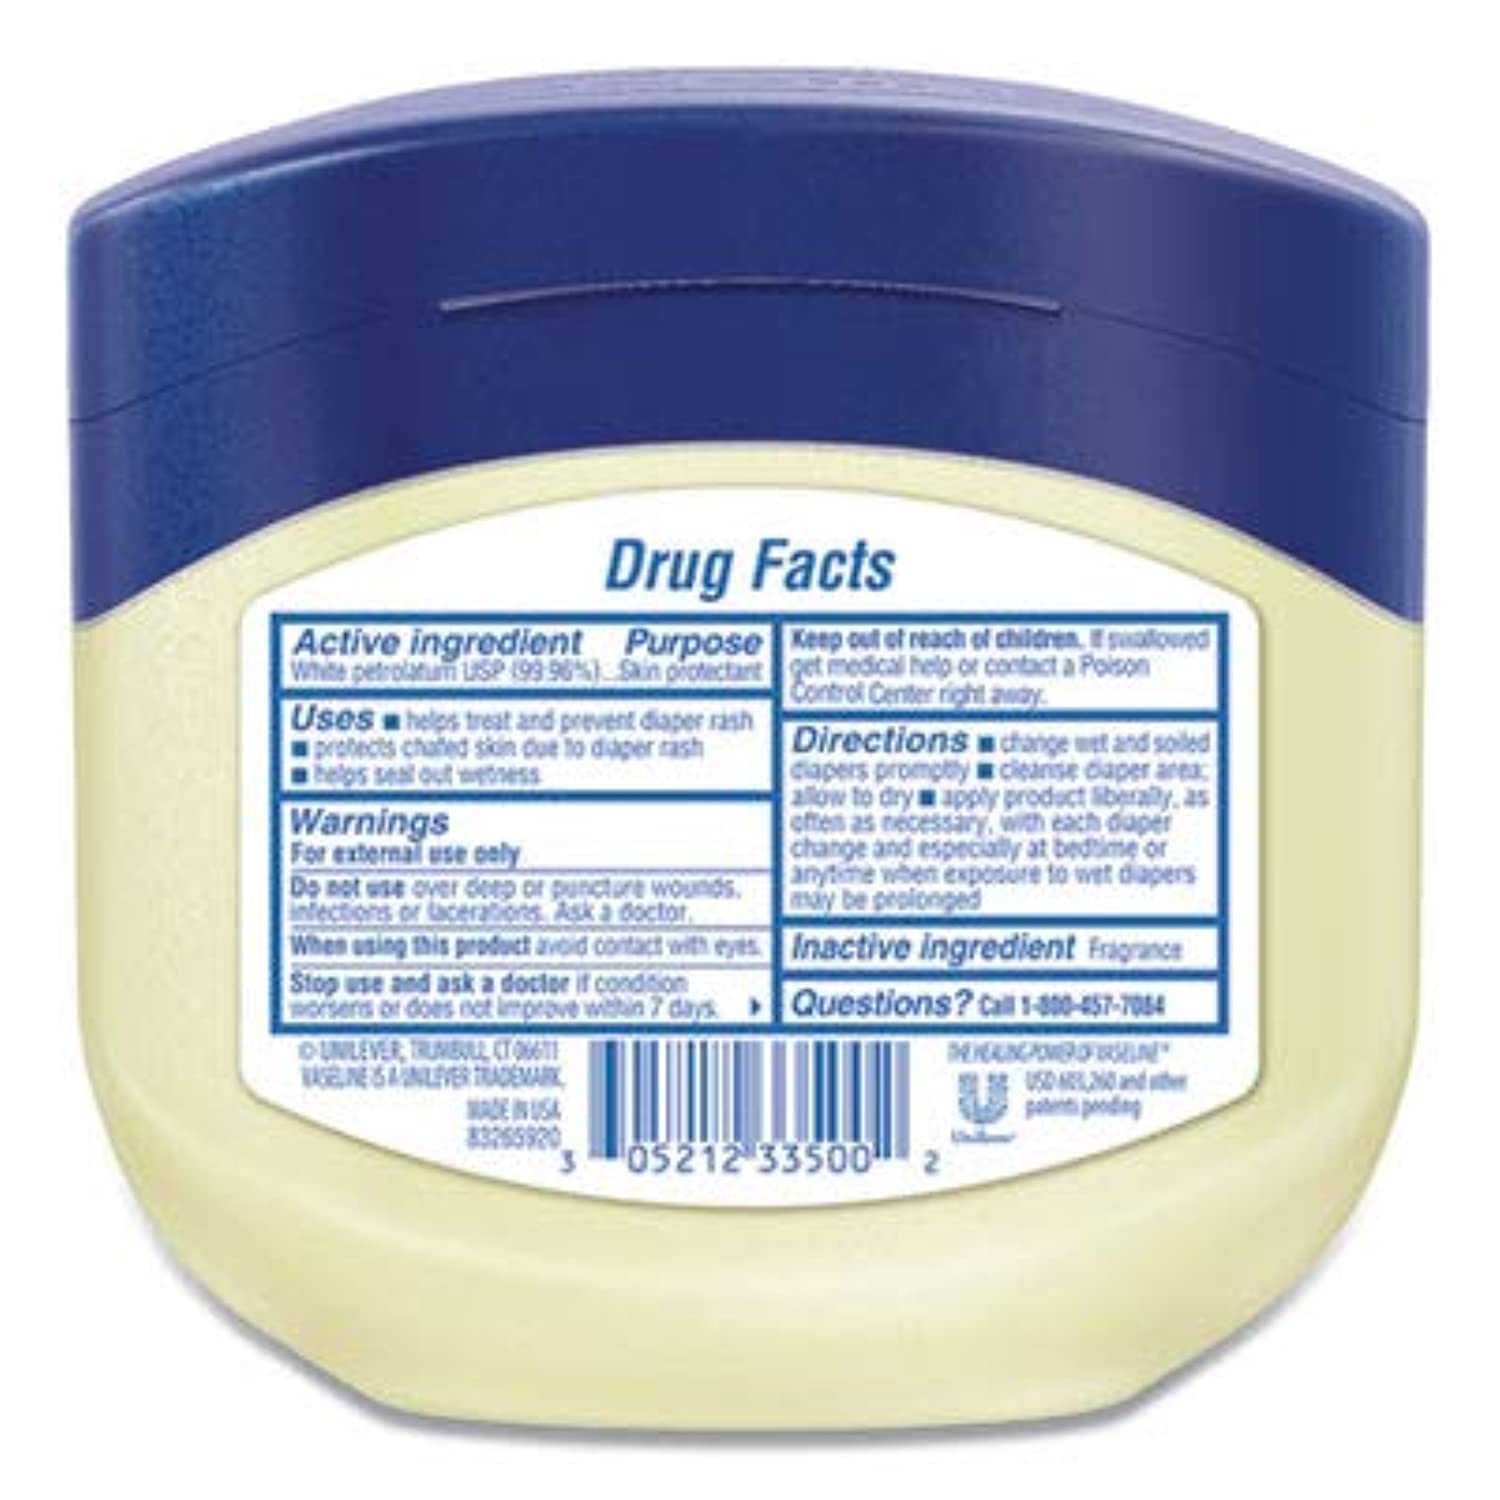 Vaseline Original Petroleum Jelly 13 oz - Hypoallergenic Moisturizer for Dry Skin, Non-Comedogenic Gel